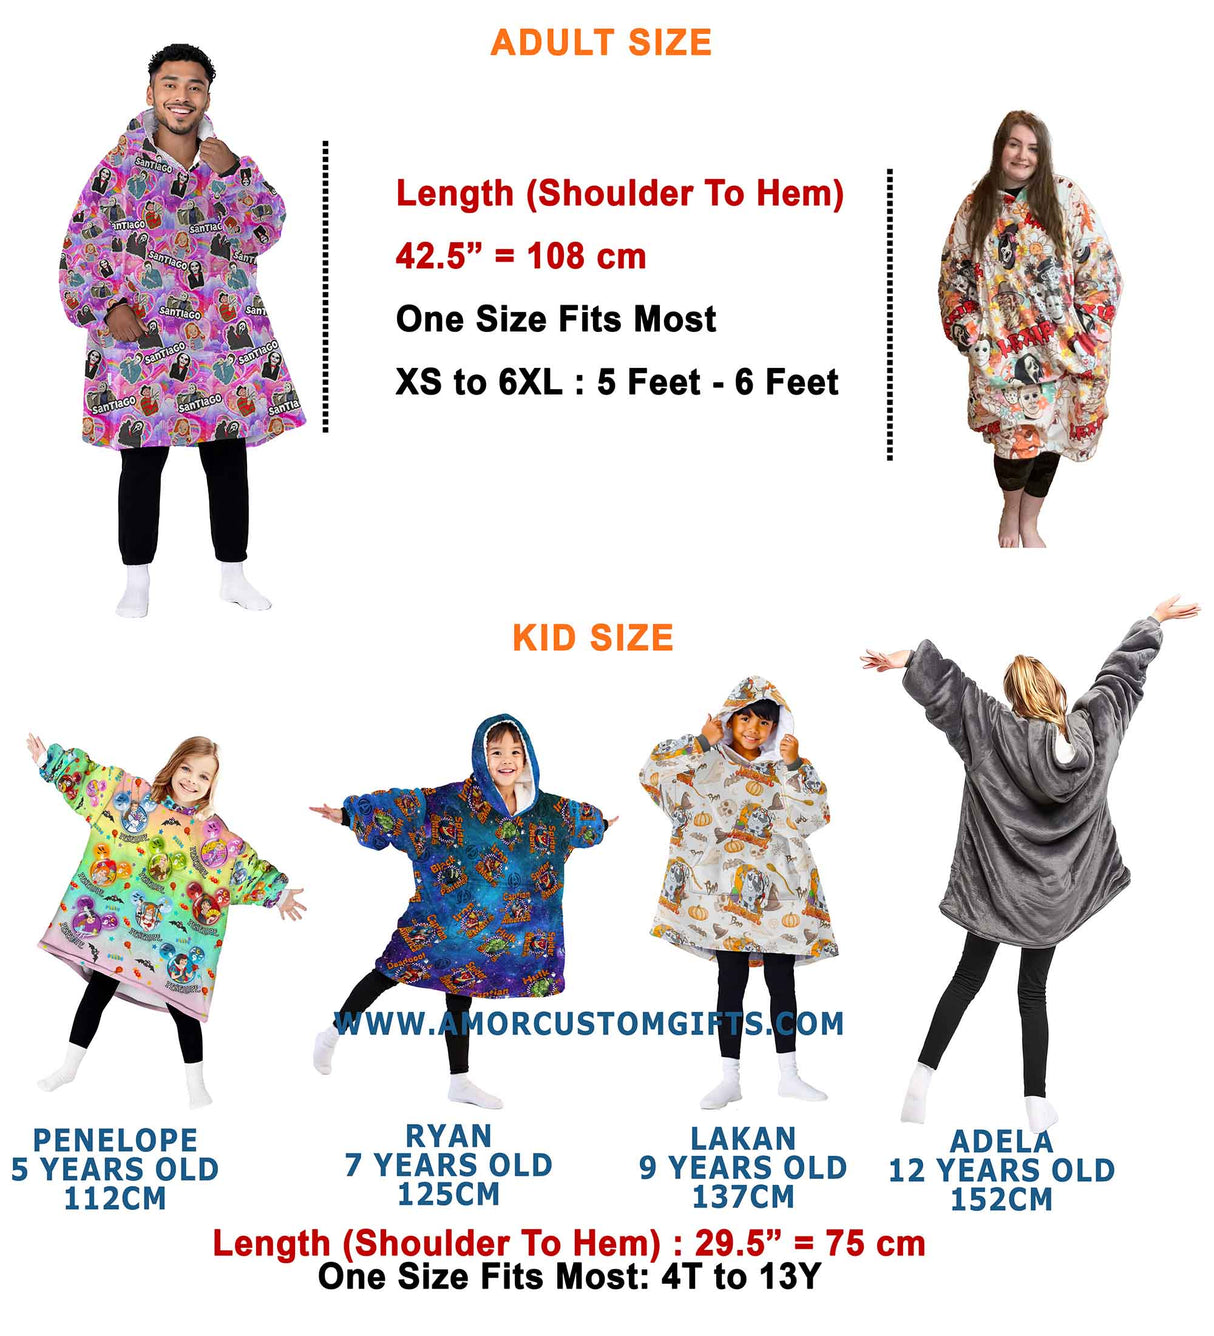 Personalized Snug Sherpa Oversized Wearable Creepy Superheroes & Villain Halloween Hoodie Blanket